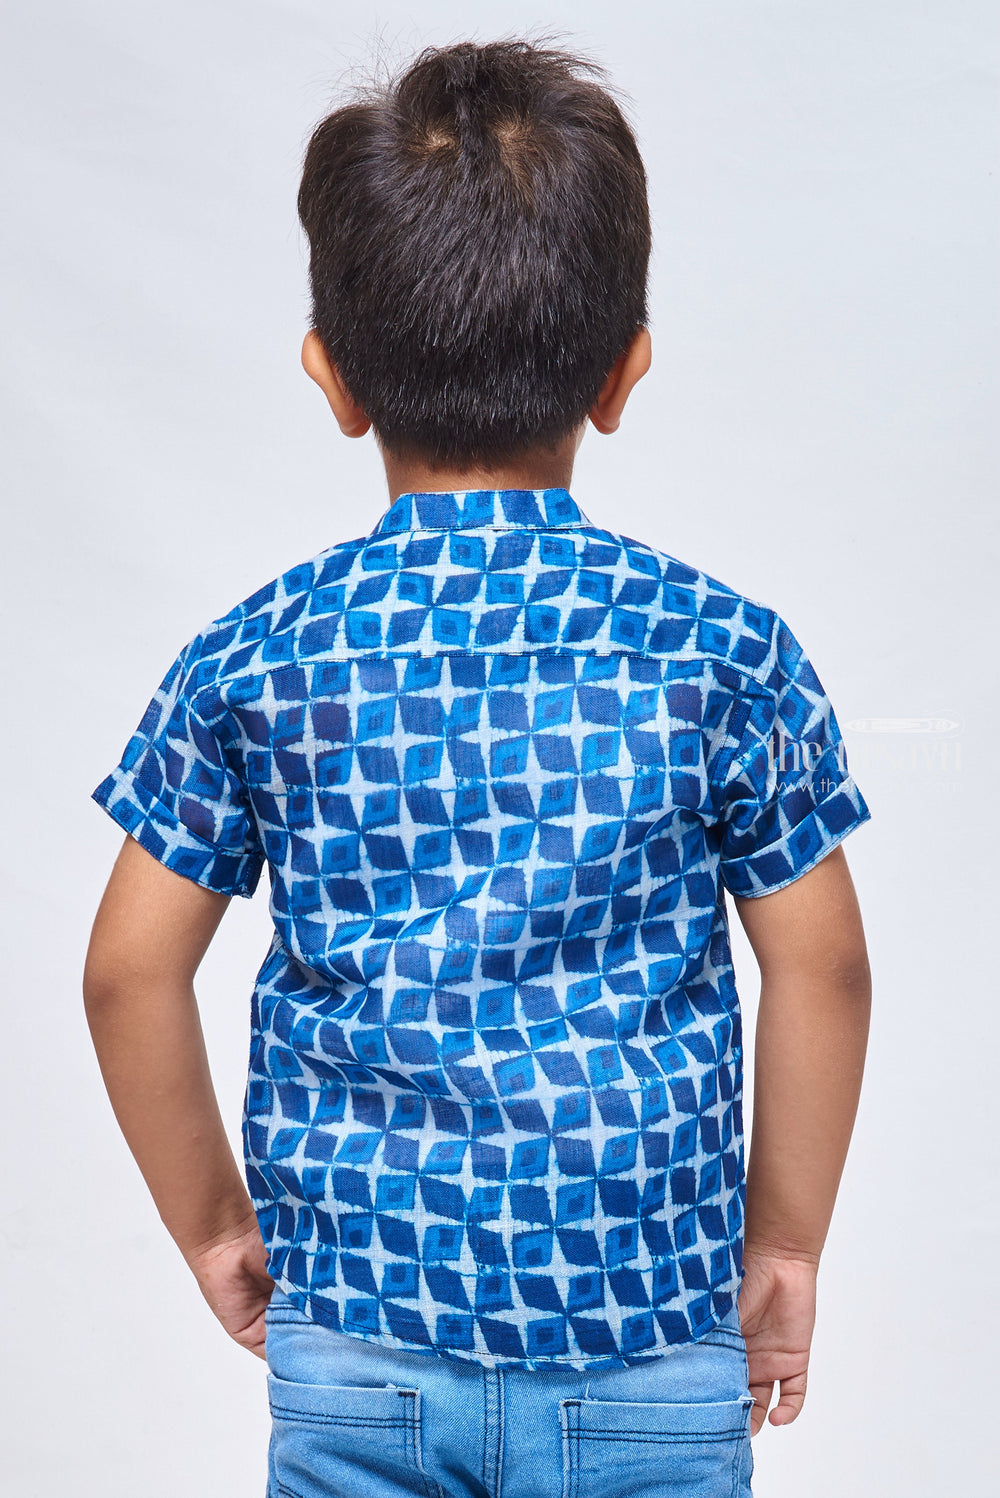 The Nesavu Boys Linen Shirt Boho Chic in Indigo: Linen Boys' Shirt with Artistic Prints for a Free-Spirited Style Nesavu Linen Boys Shirt with Artistic Prints | Boys Premium Shirt | The Nesavu